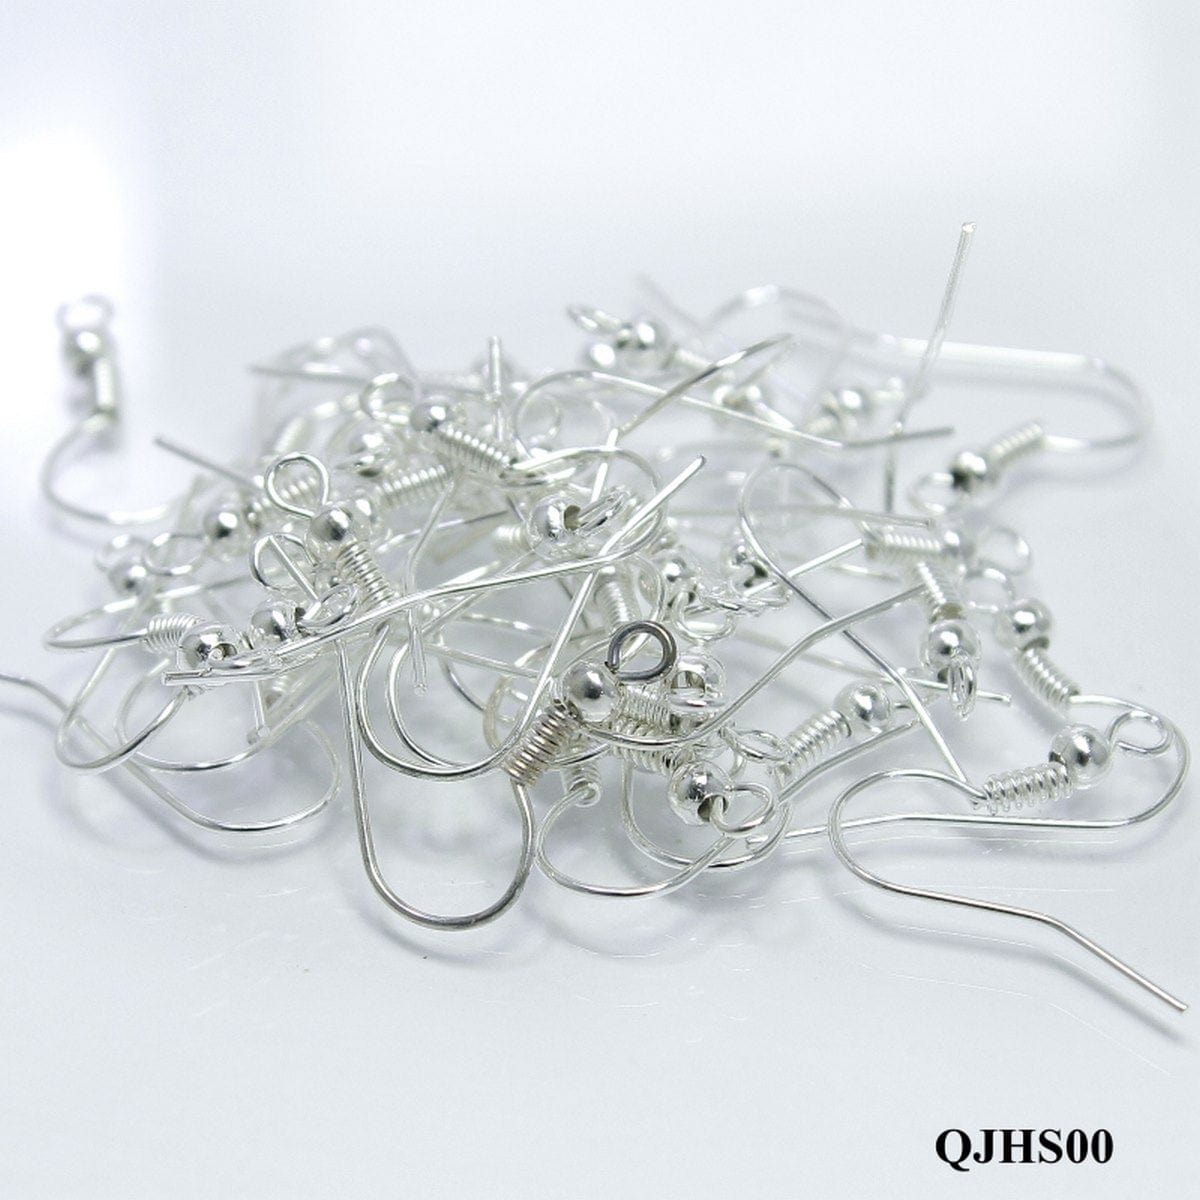 jags-mumbai Jewellery Accessories Quilling Jewellery Hooks Silver 15gm QJHS00